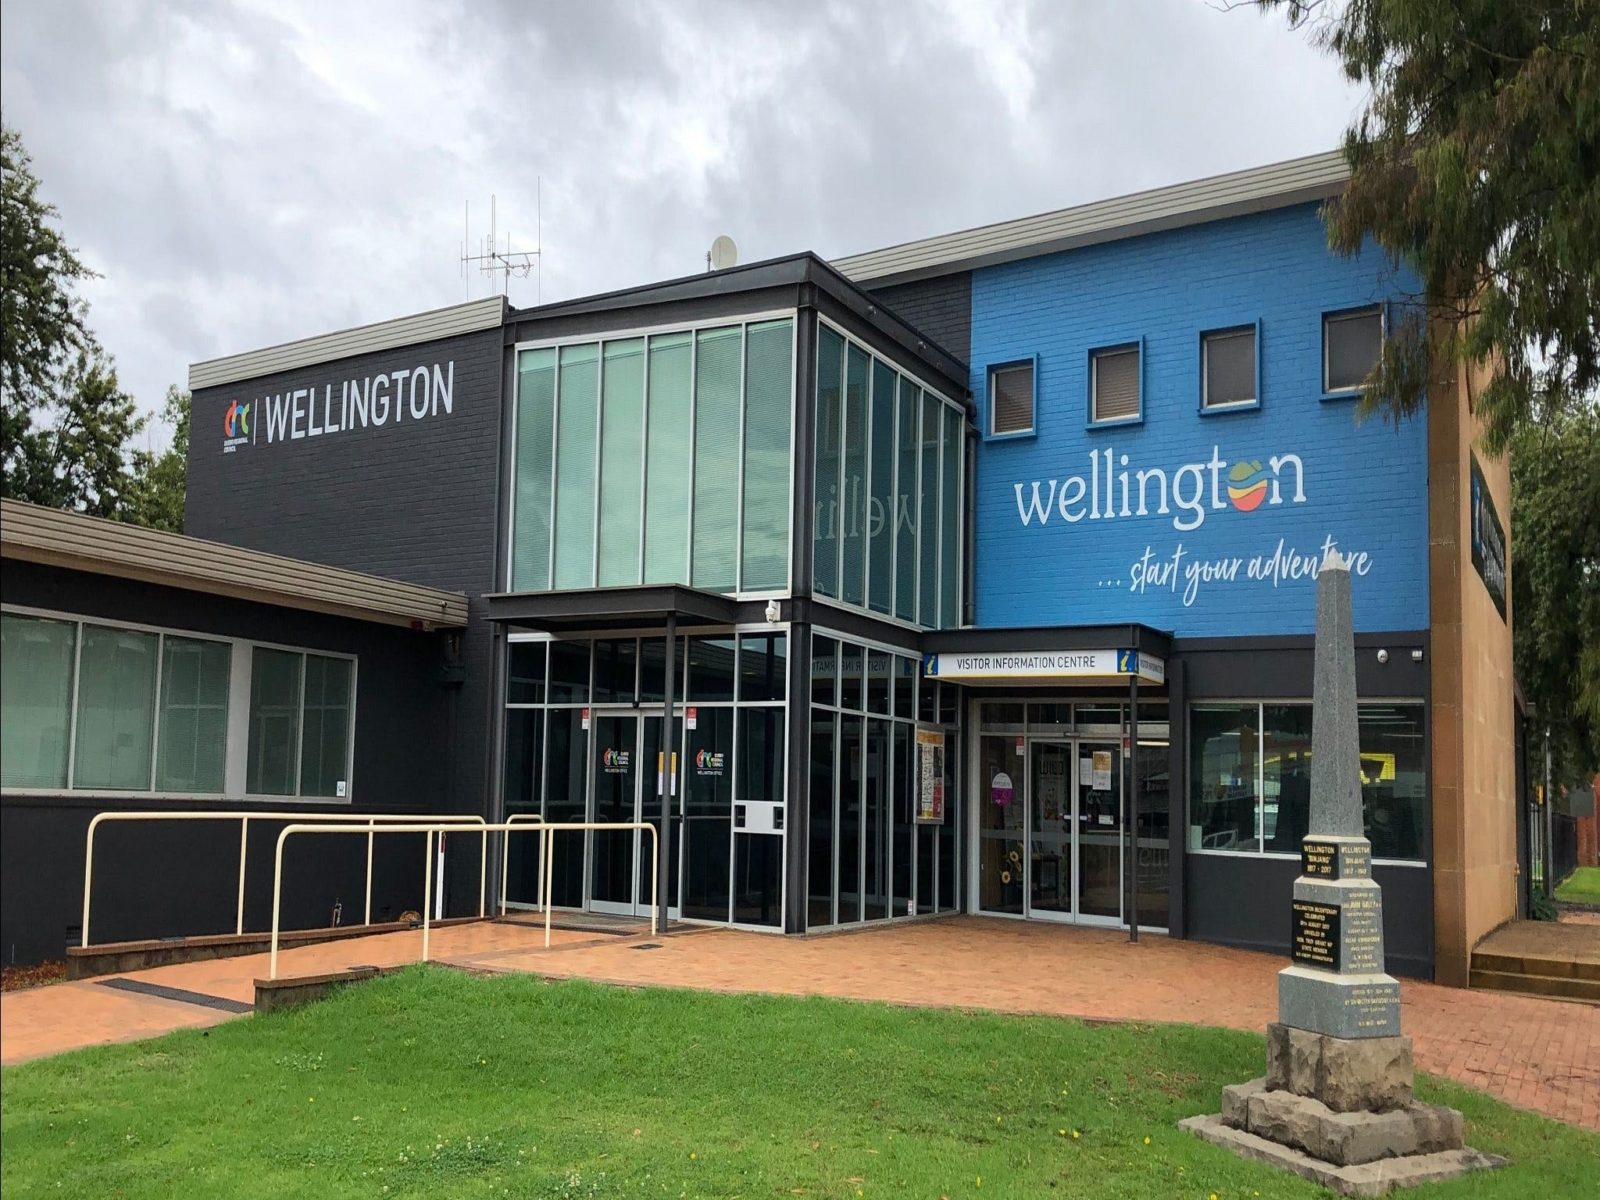 Wellington Visitor Information Centre